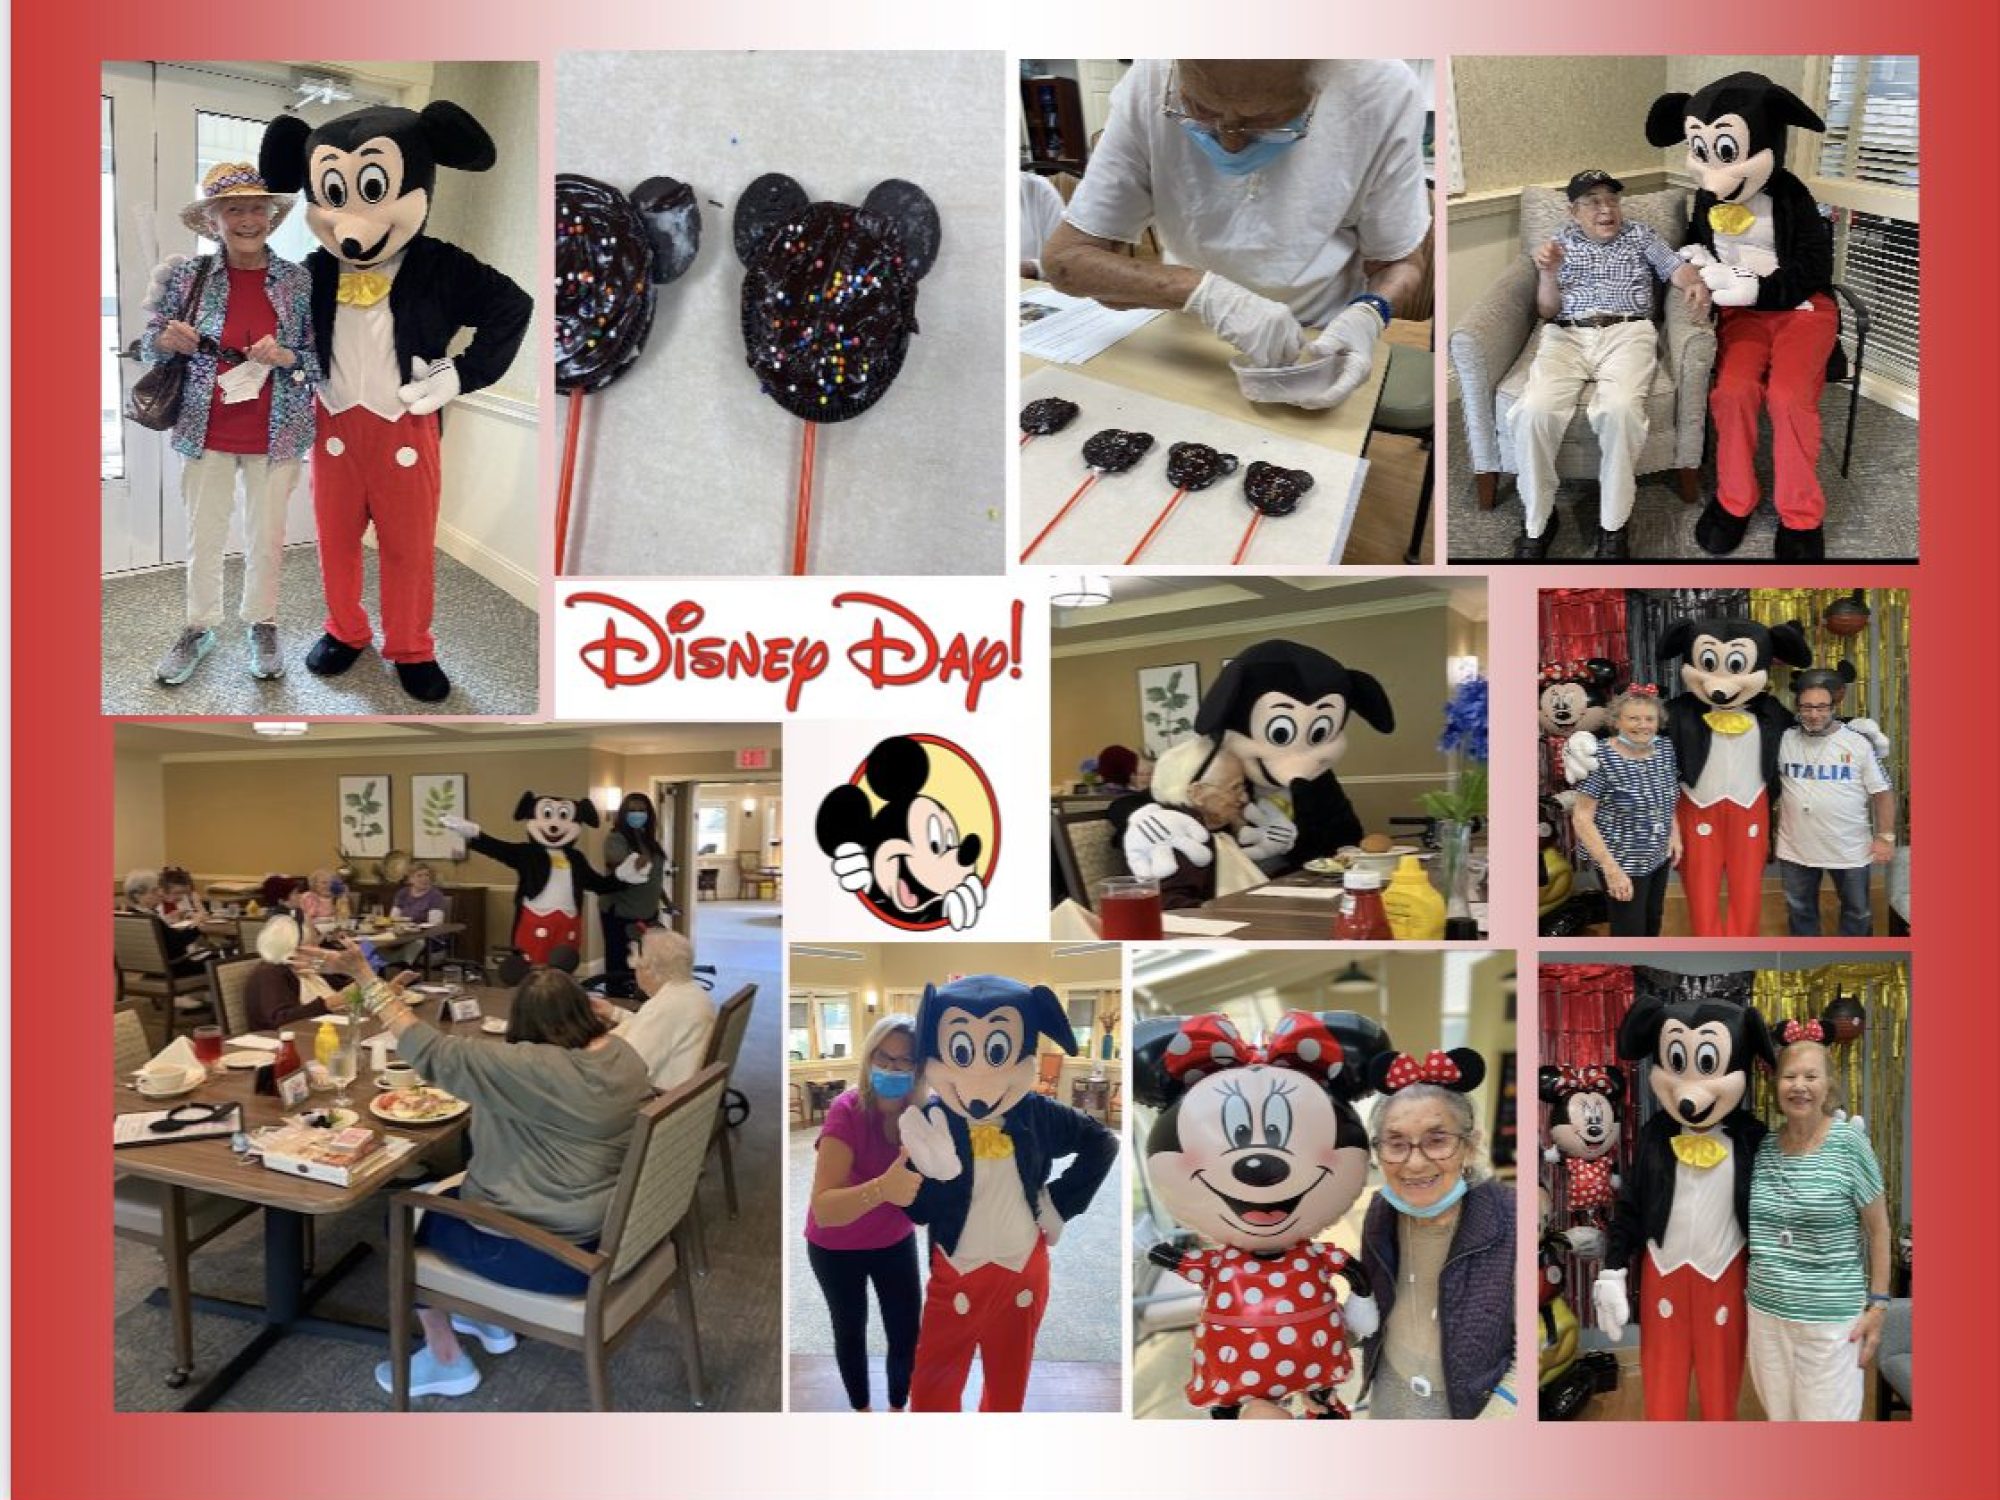 Disney Day collage